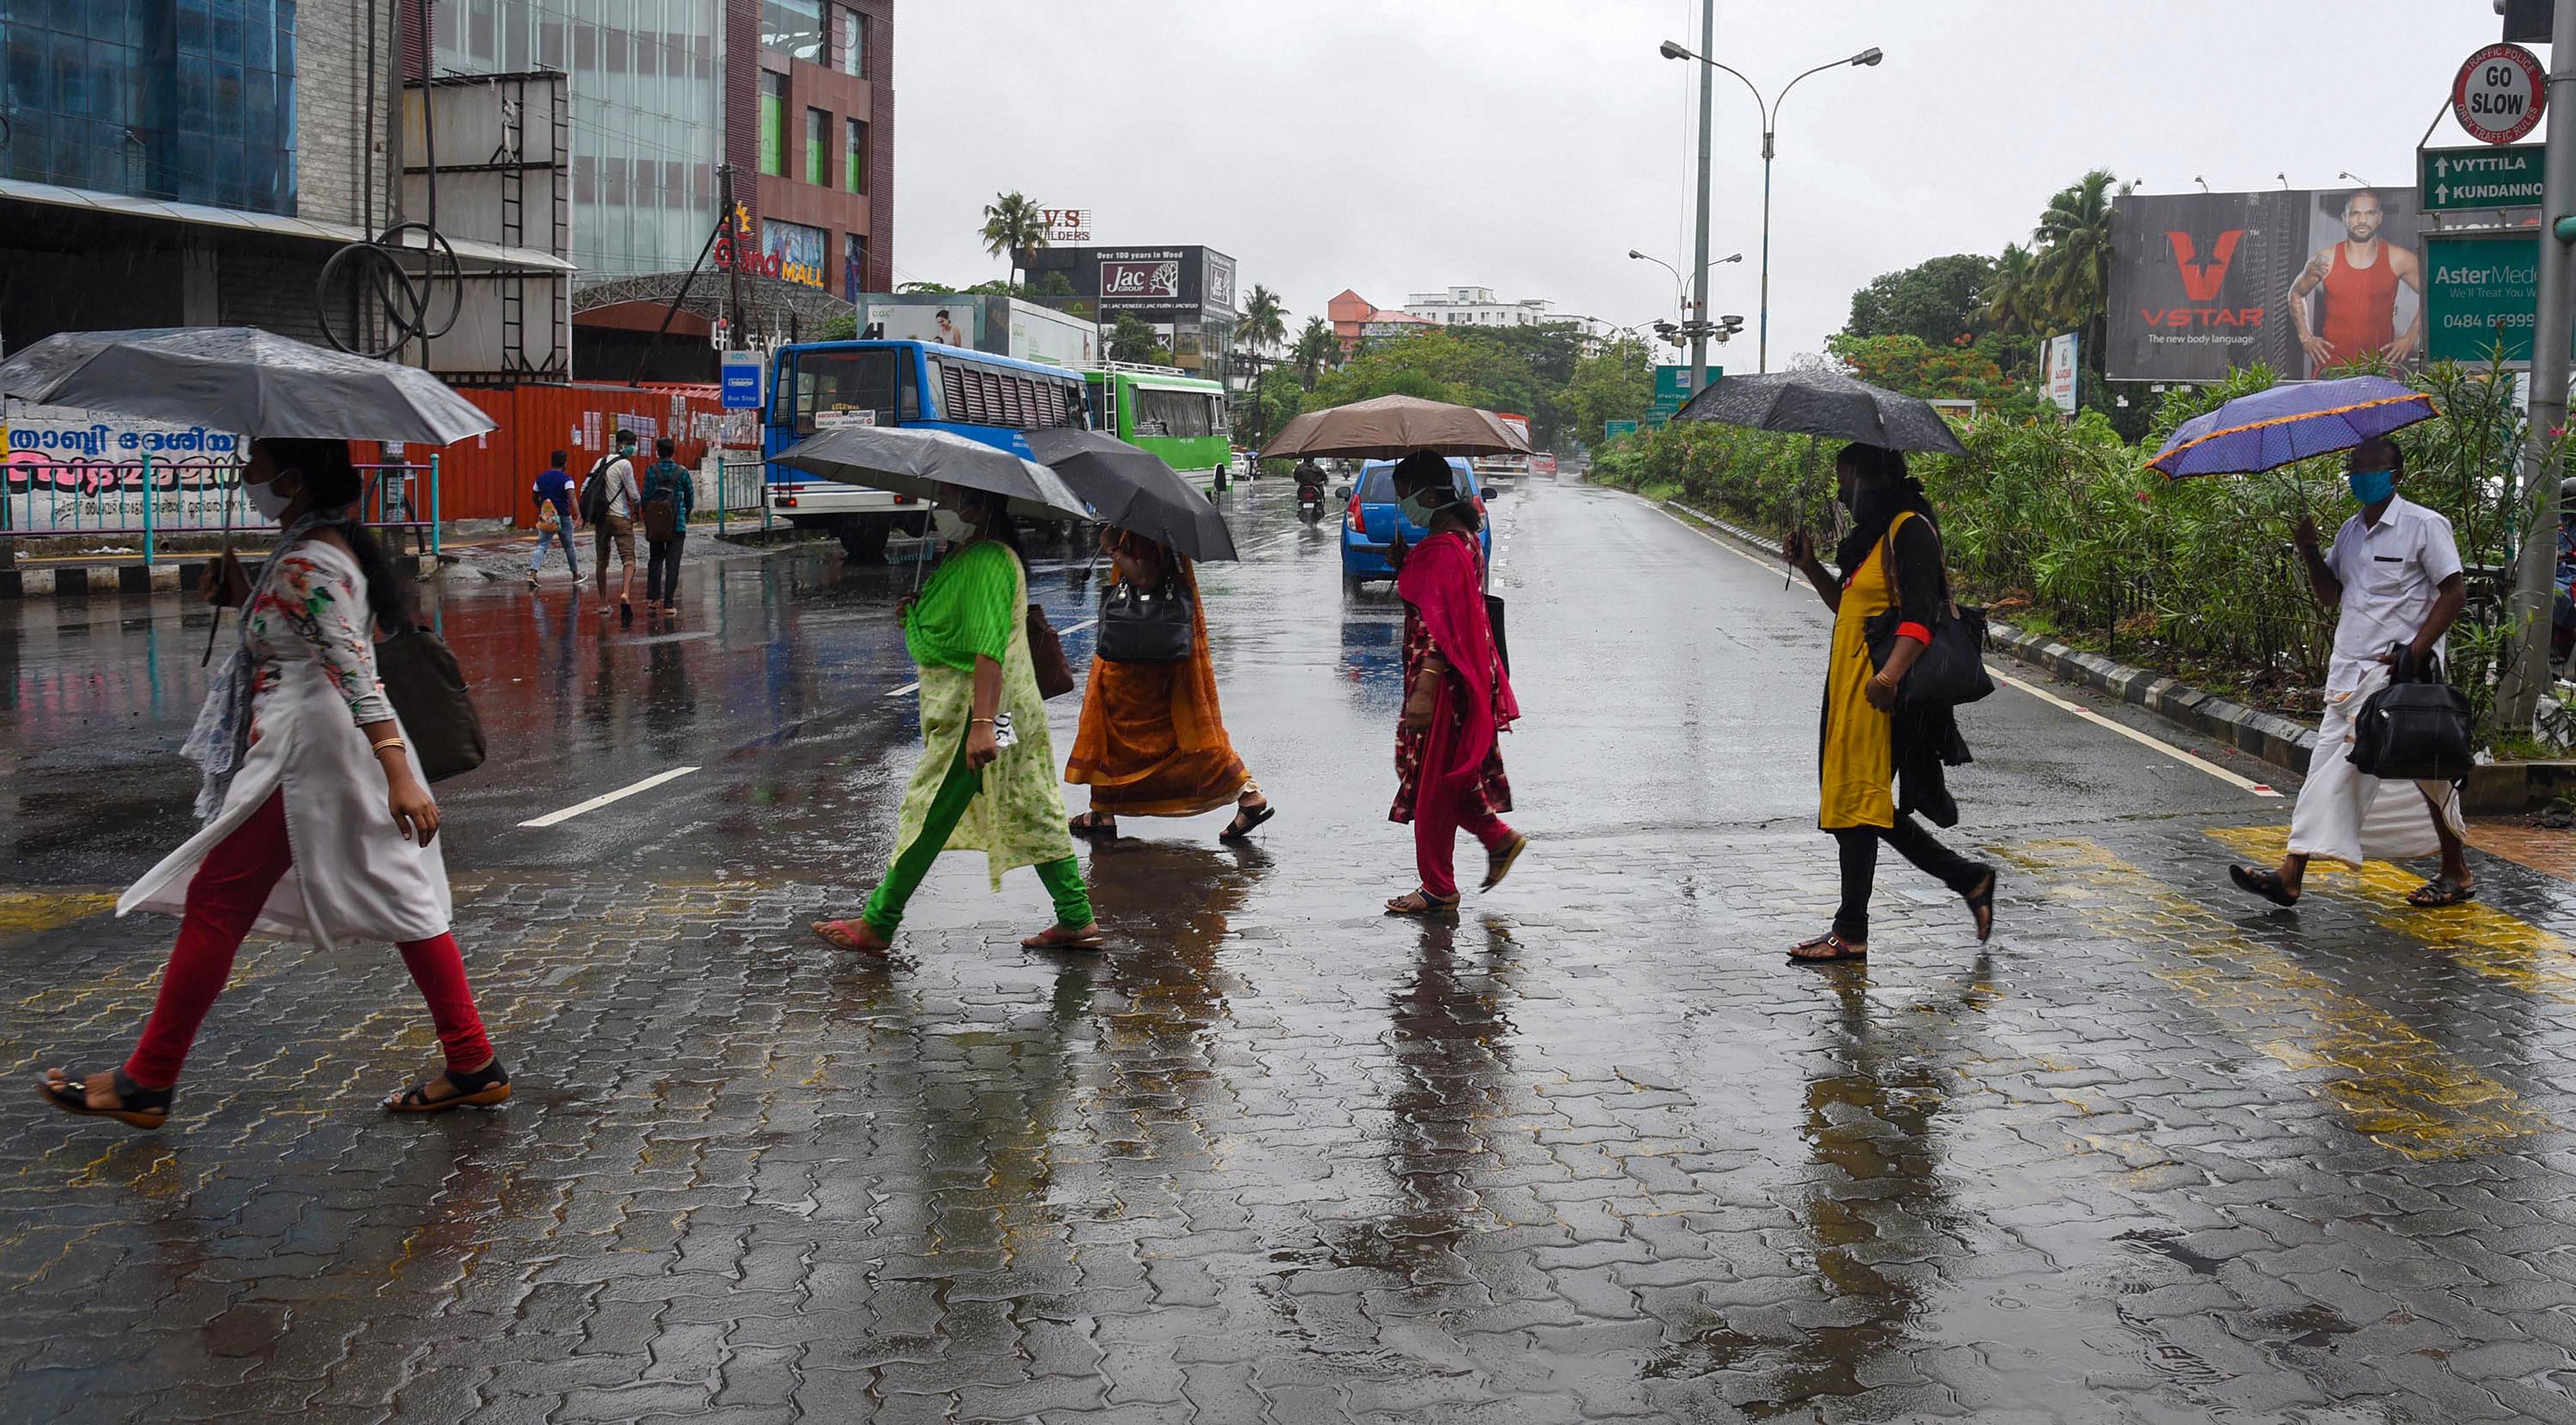 People under umbrellas walk on a road during rain as monsoon has hit Kerala to embark on the rainy season in the country amid coronavirus pandemic, in Kochi, Tuesday, June 2, 2020. (PTI Photo)